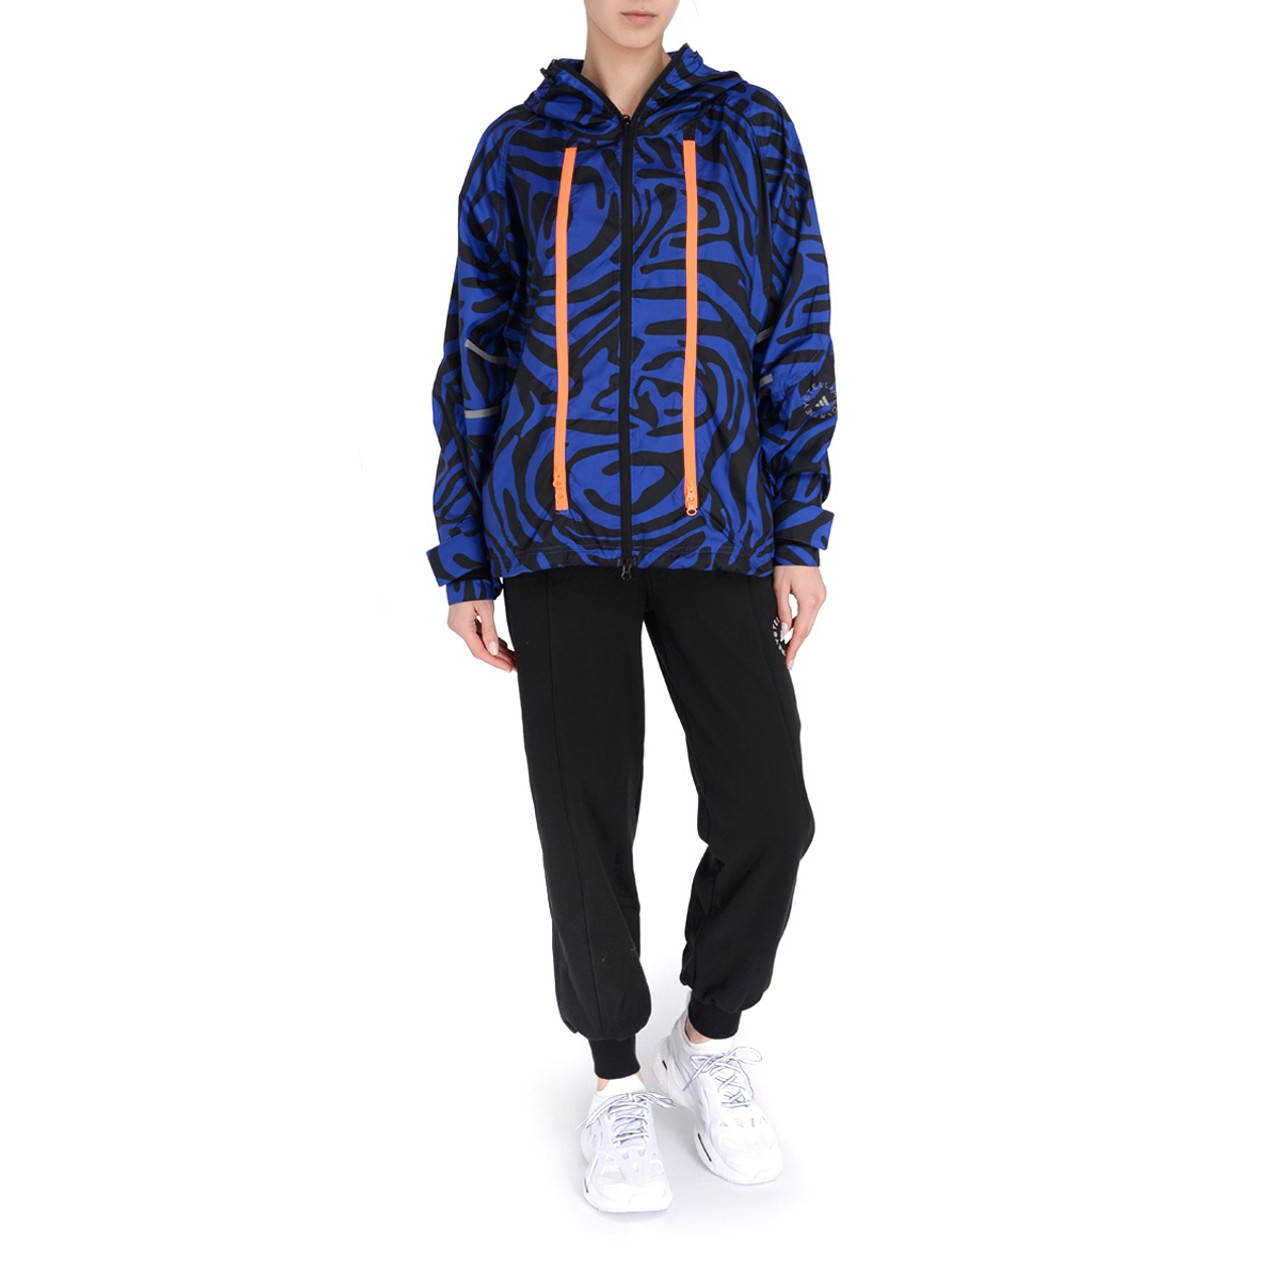 Windproof jacket Adidas by Stella McCartney blue with zebra print 